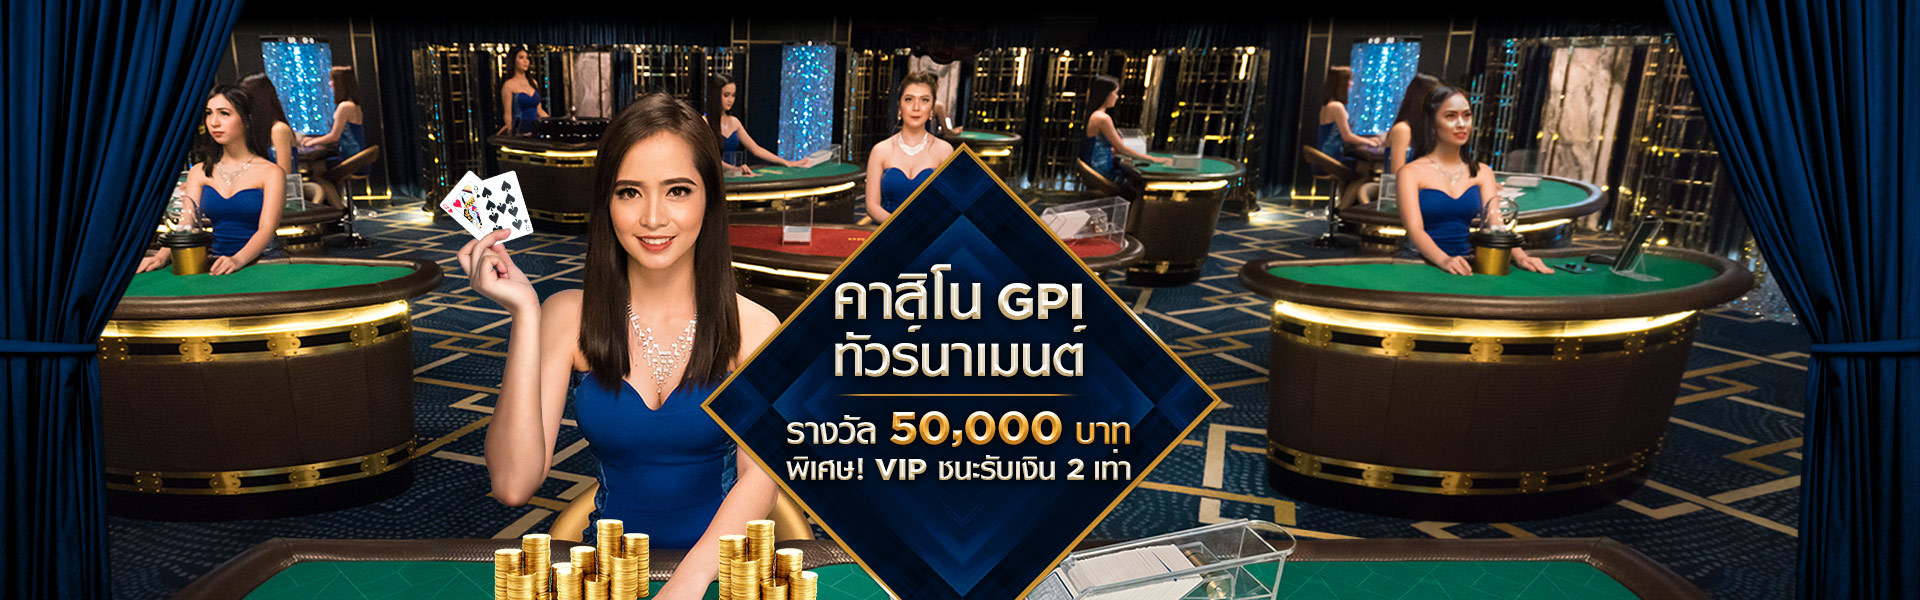 Casino GPI 50,000 THB